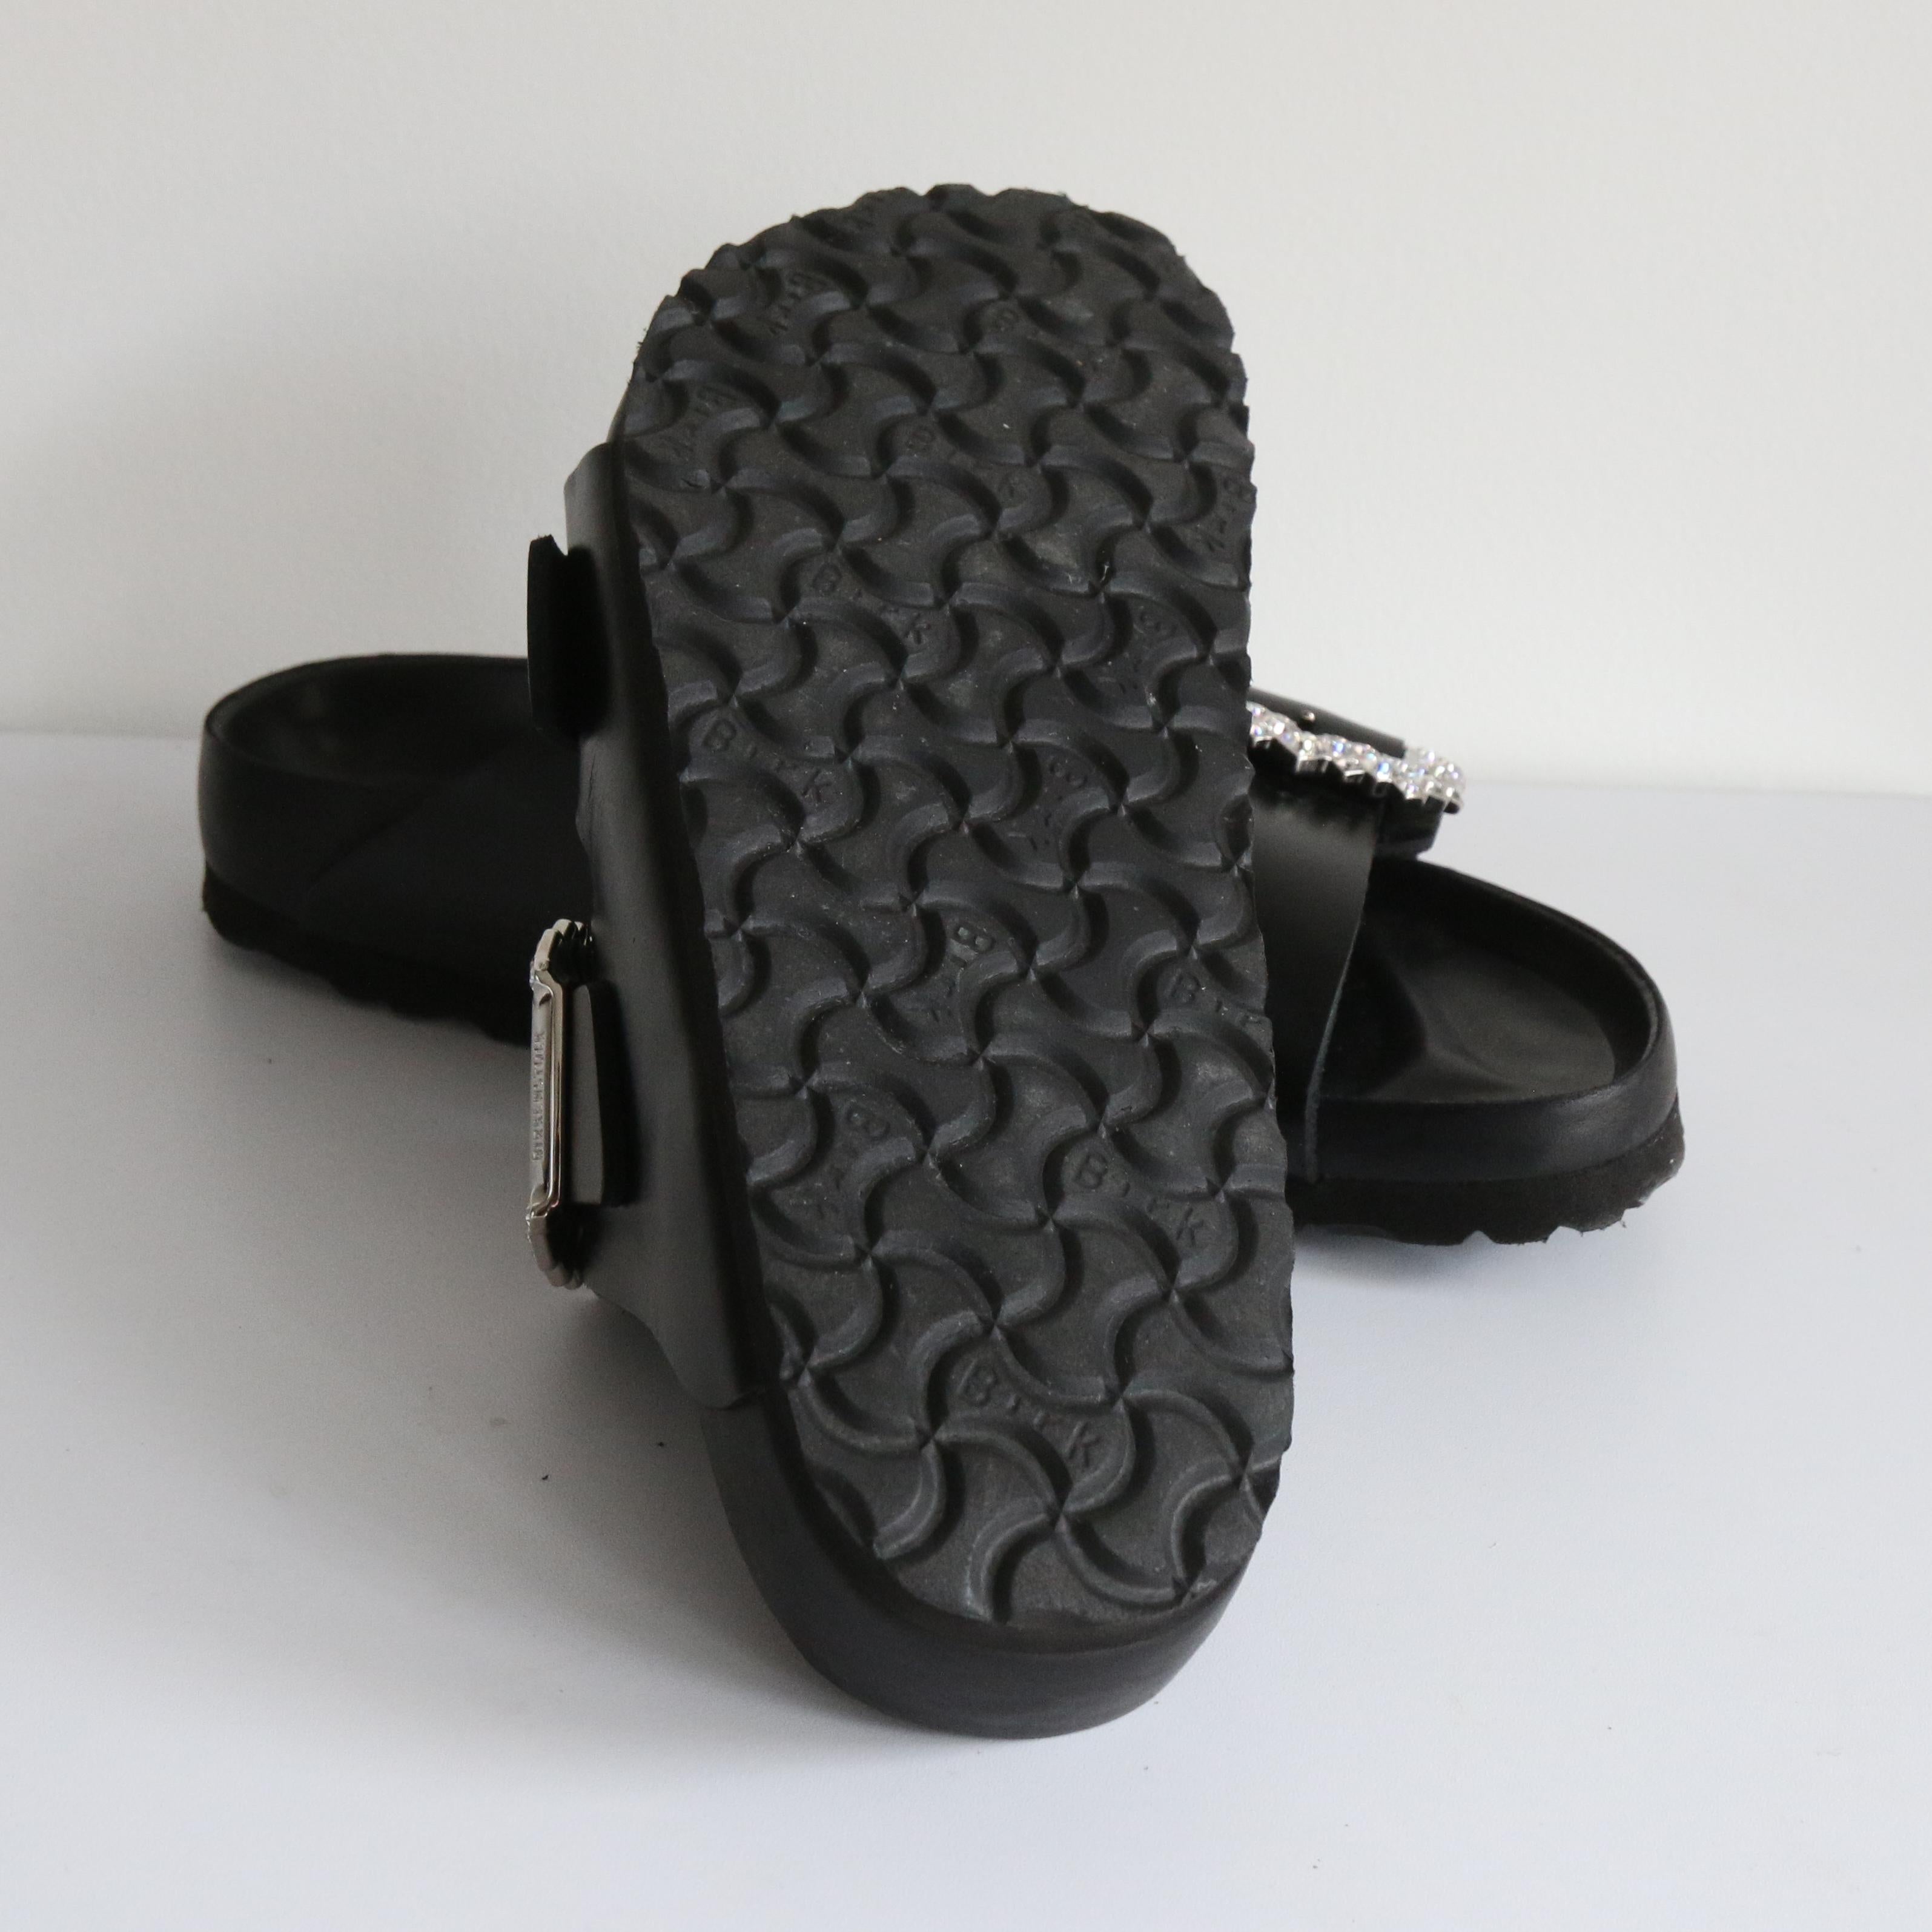  Black Leather & Rhinestone Manolo Blahnik For Birkenstock Sandals UK 6 US 8 EU  6